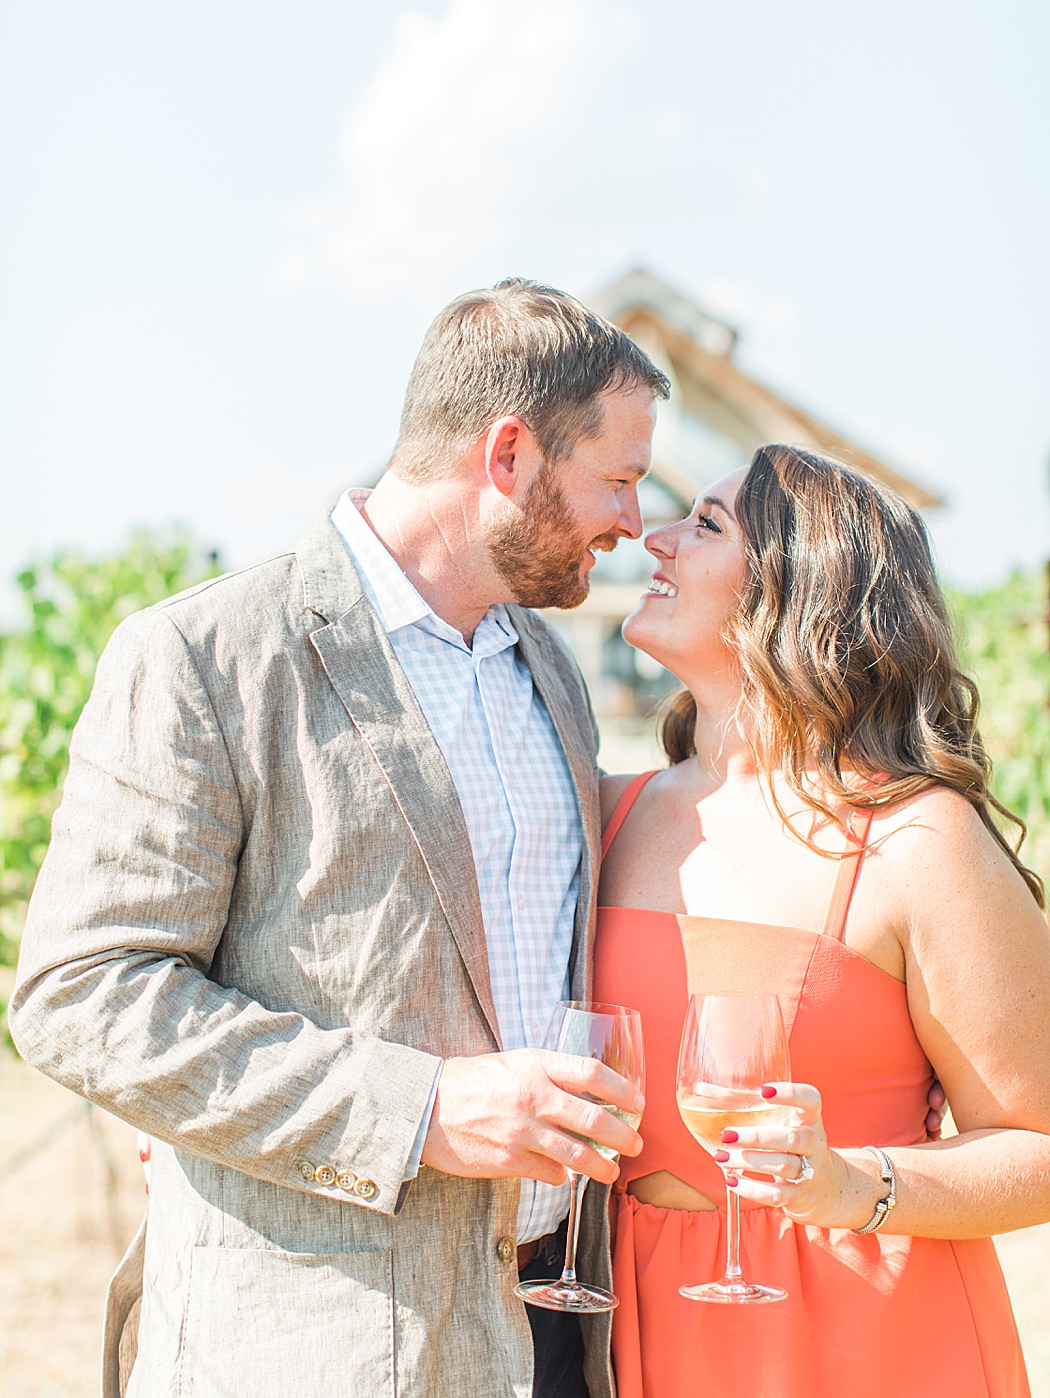 Surprise proposal at Augusta Vin vineyard in Fredericksburg Texas by Allison Jeffers Photography 0031